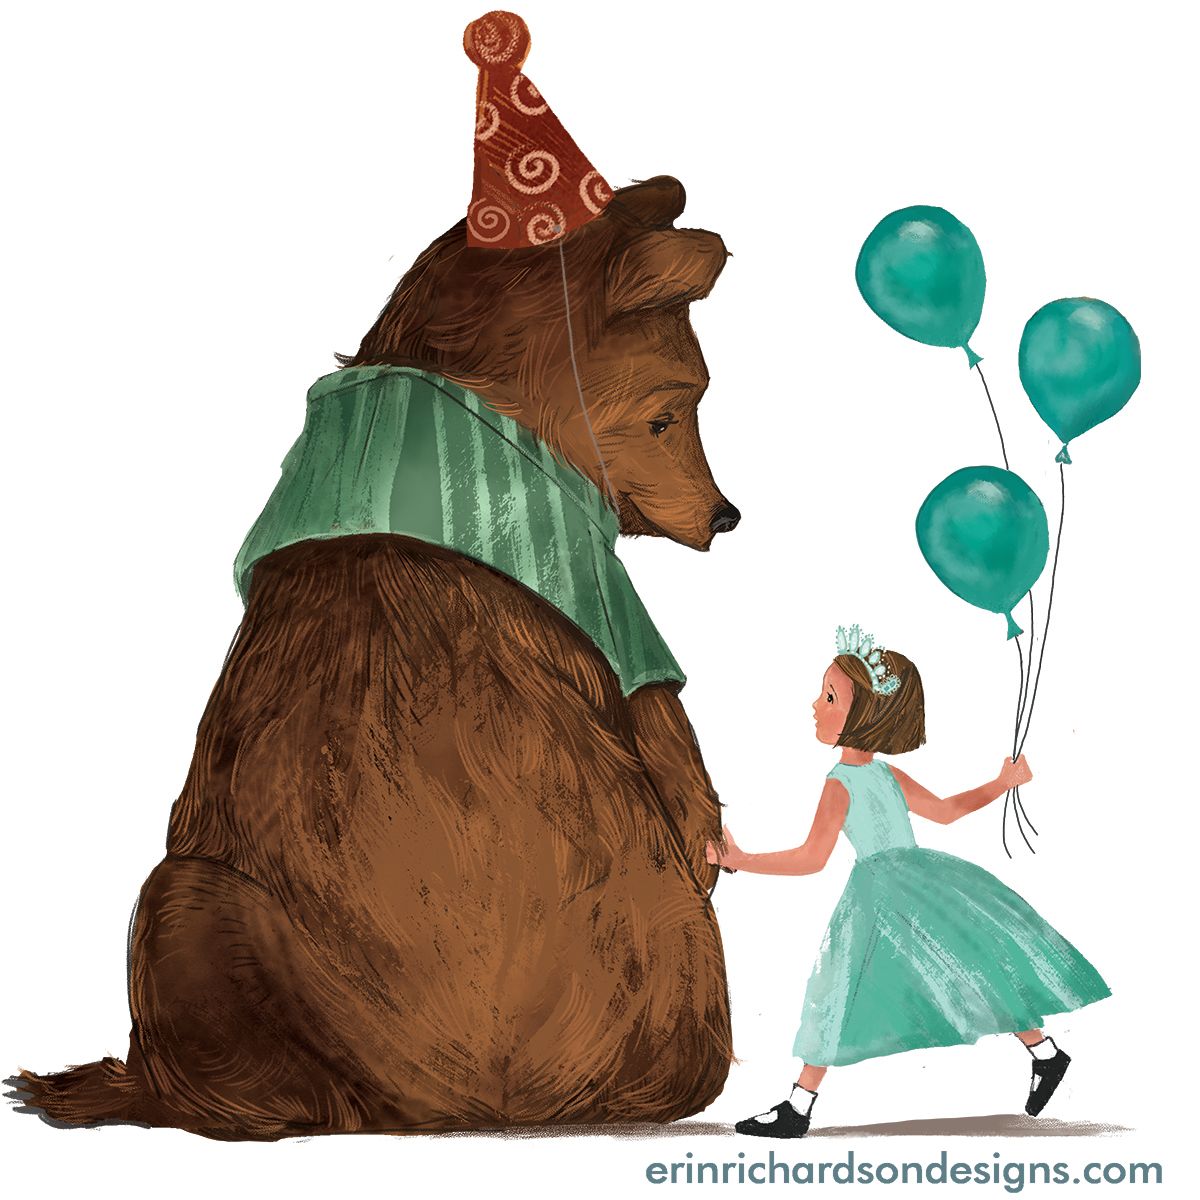 This Girl and Bear Friend2.jpg